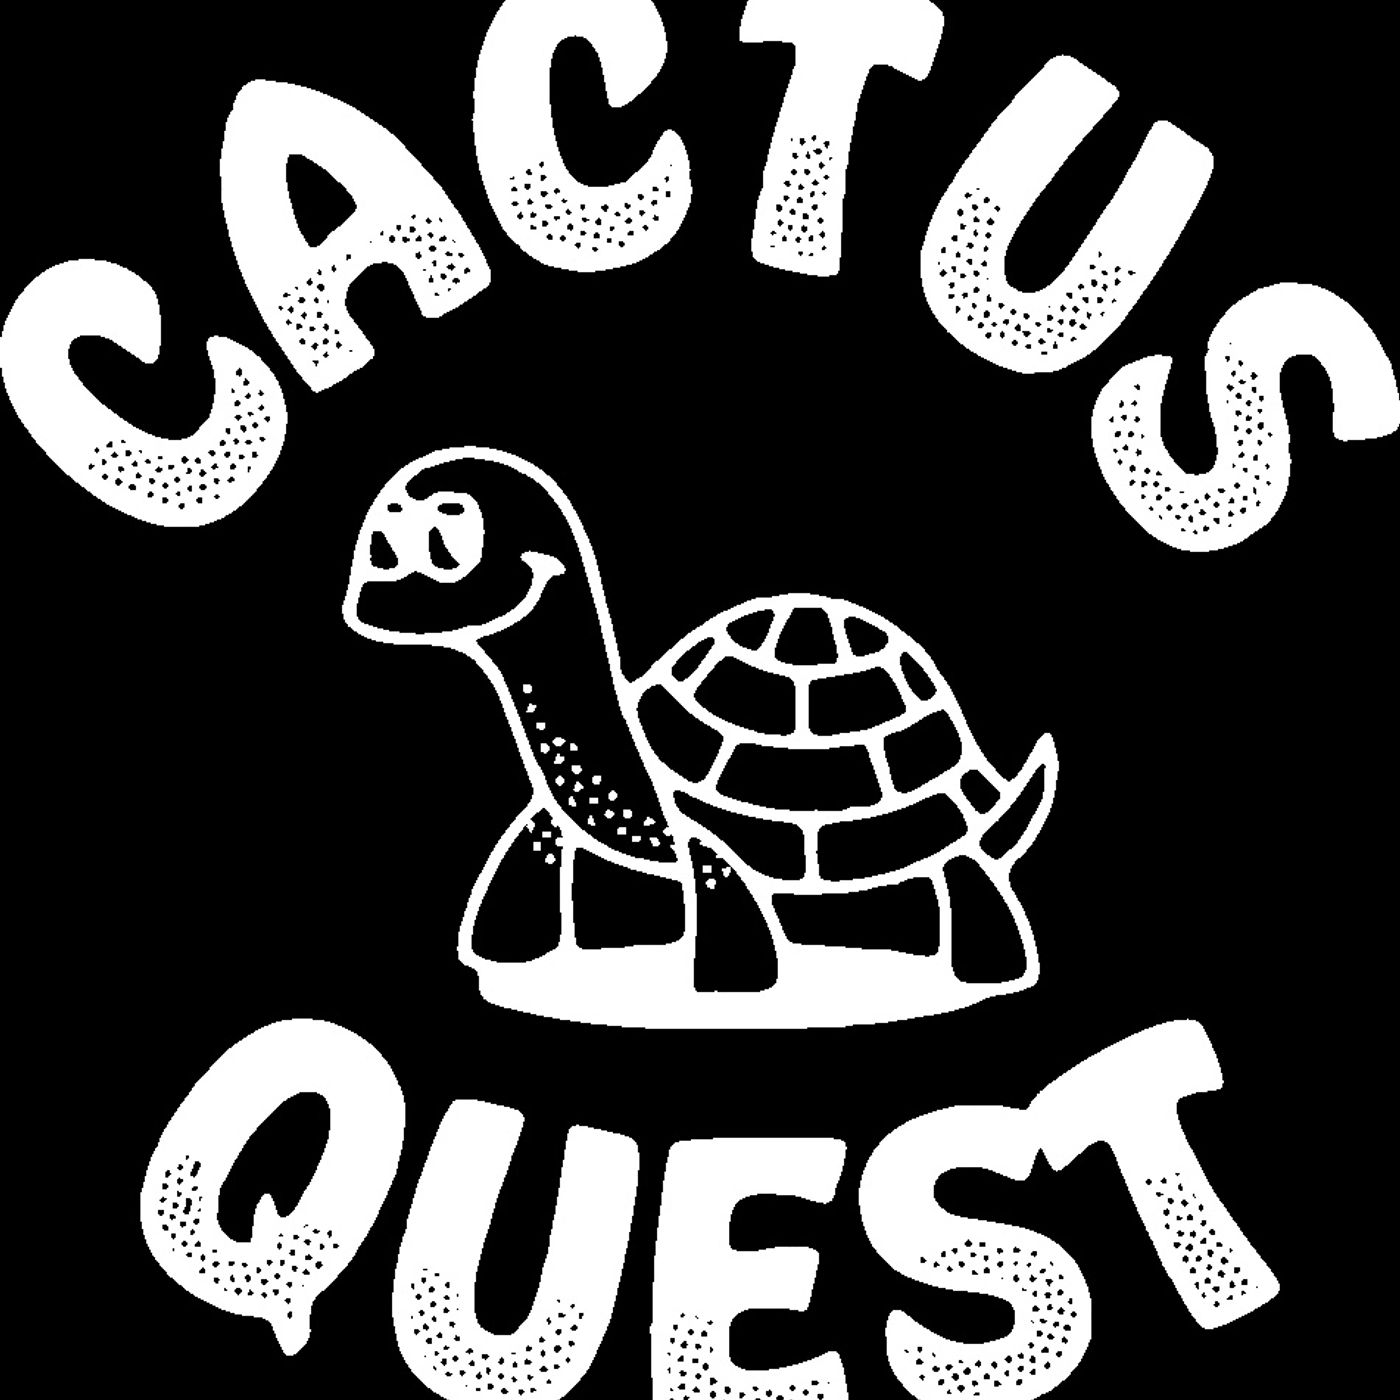 Hunter Martinez aka Cactus Quest